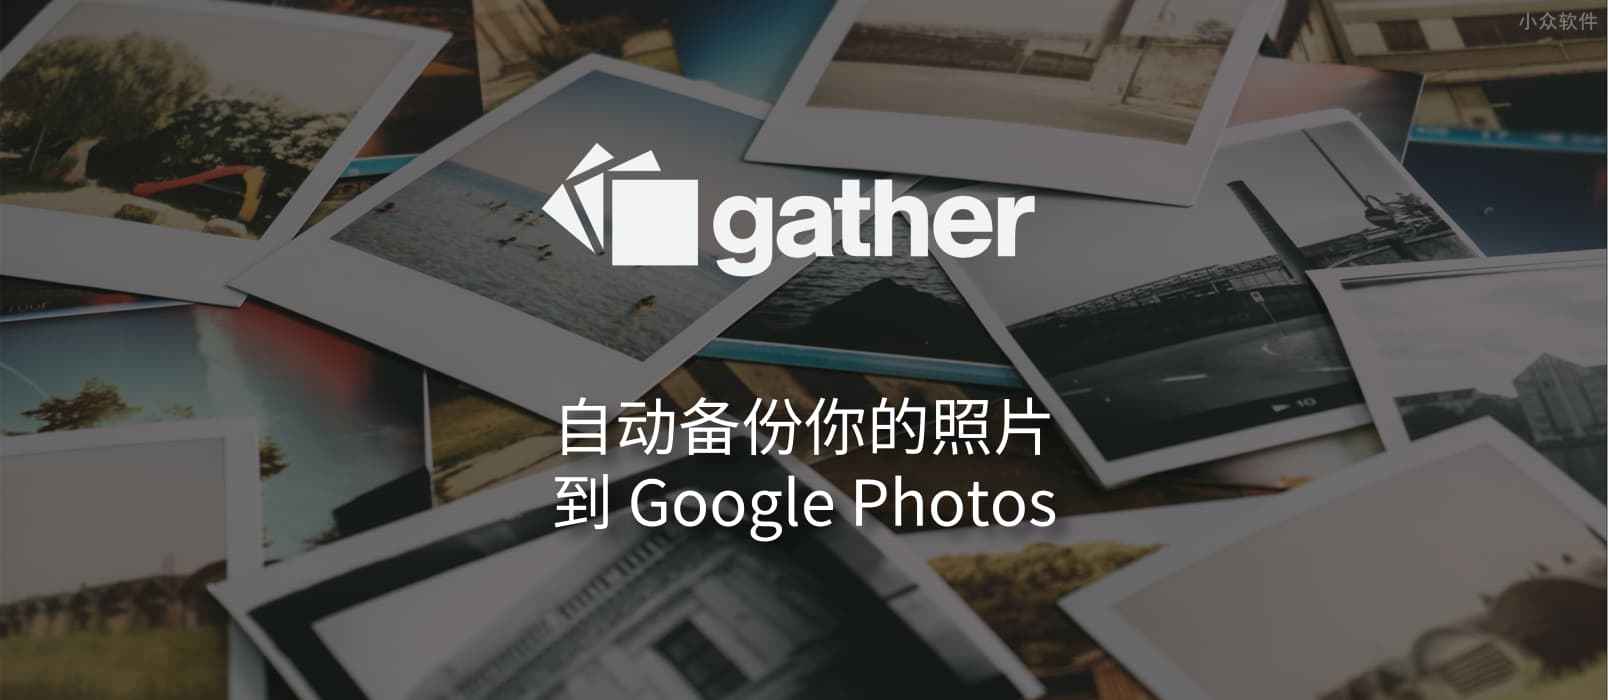 Gather – 将散落在 Dropbox, Instagram, Facebook 的图片备份至 Google Photos [Web]